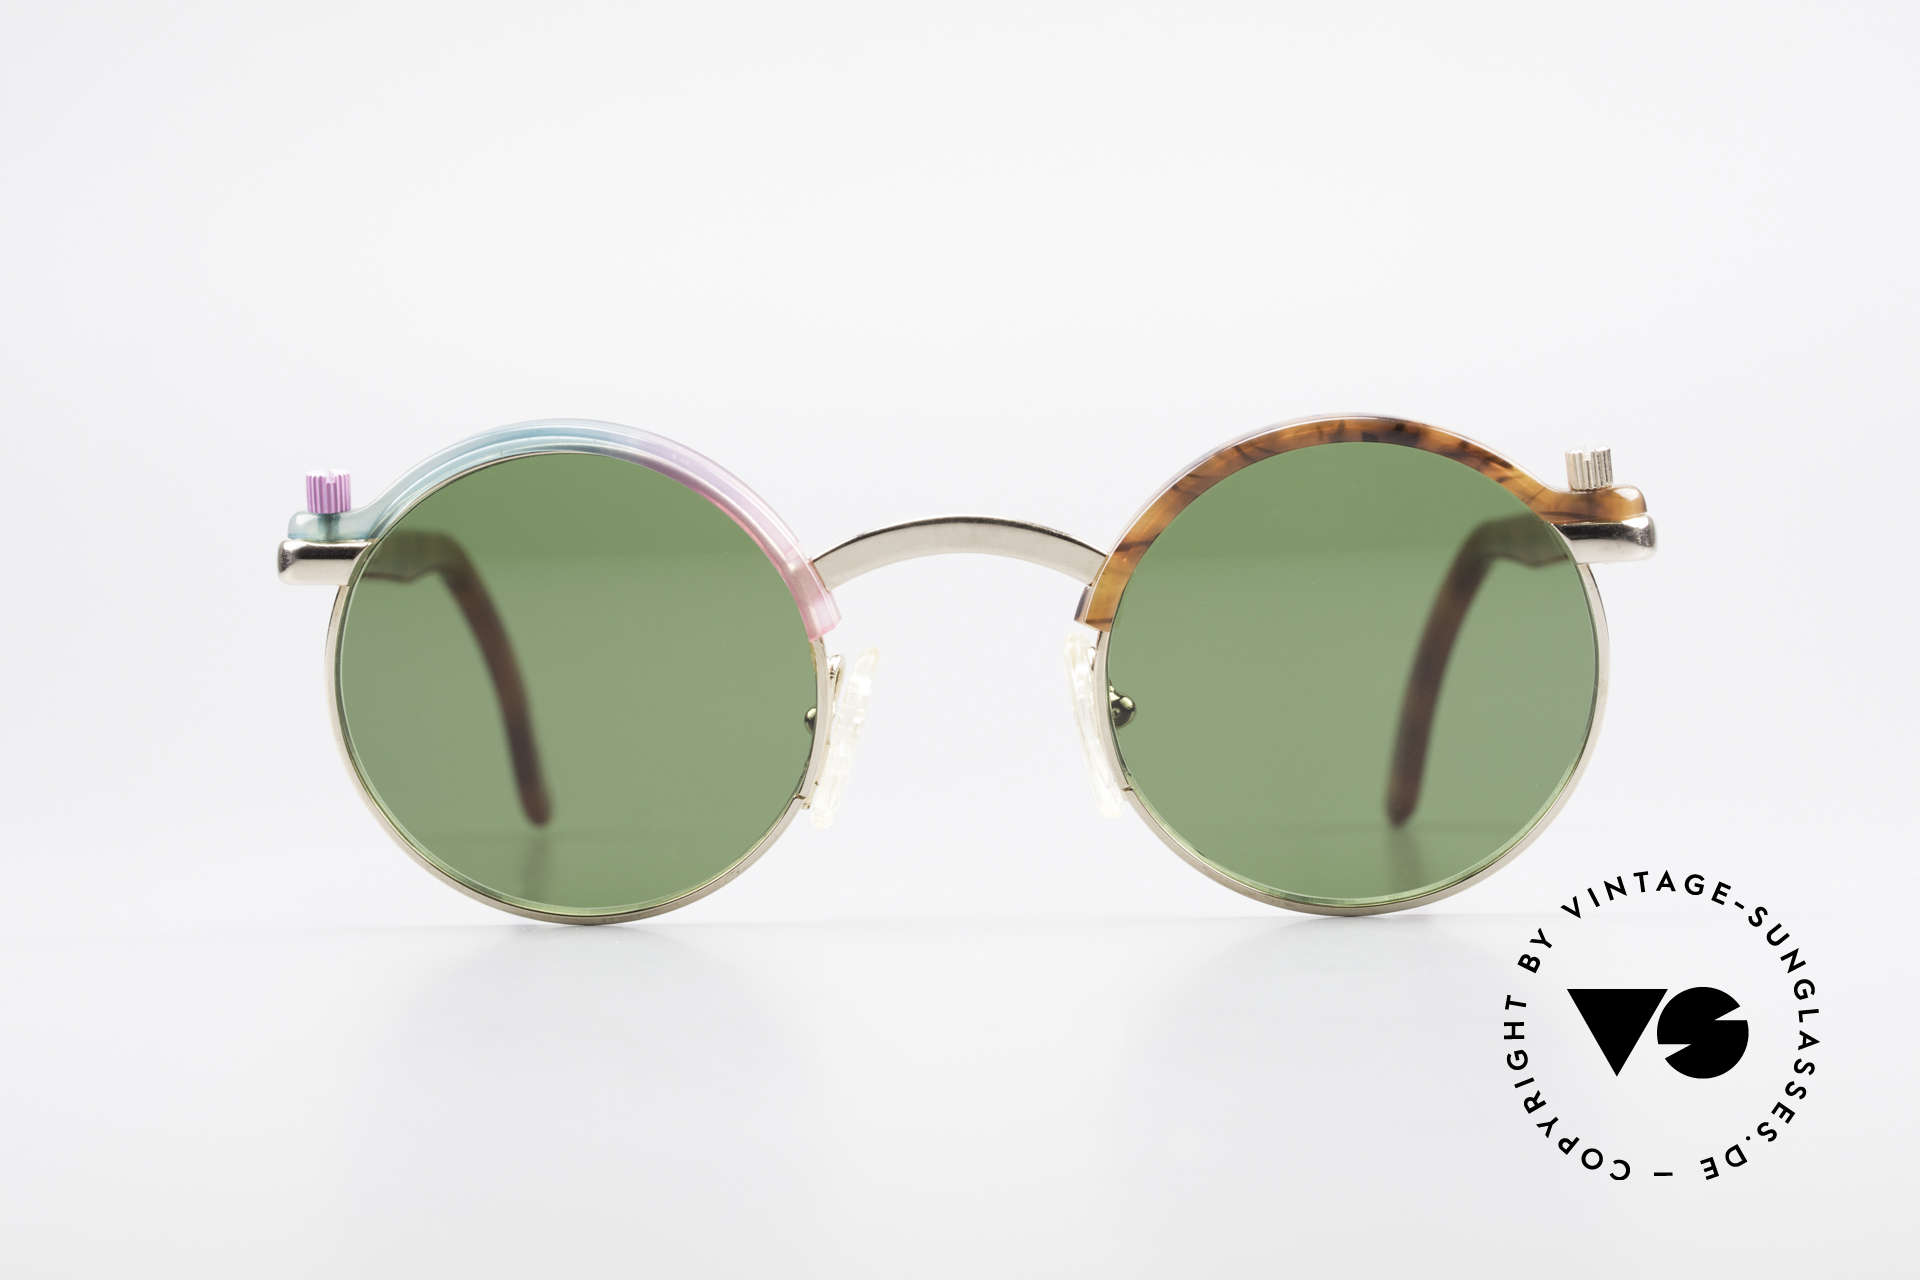 Sunglasses Poul Circle Round Vintage Panto Shades